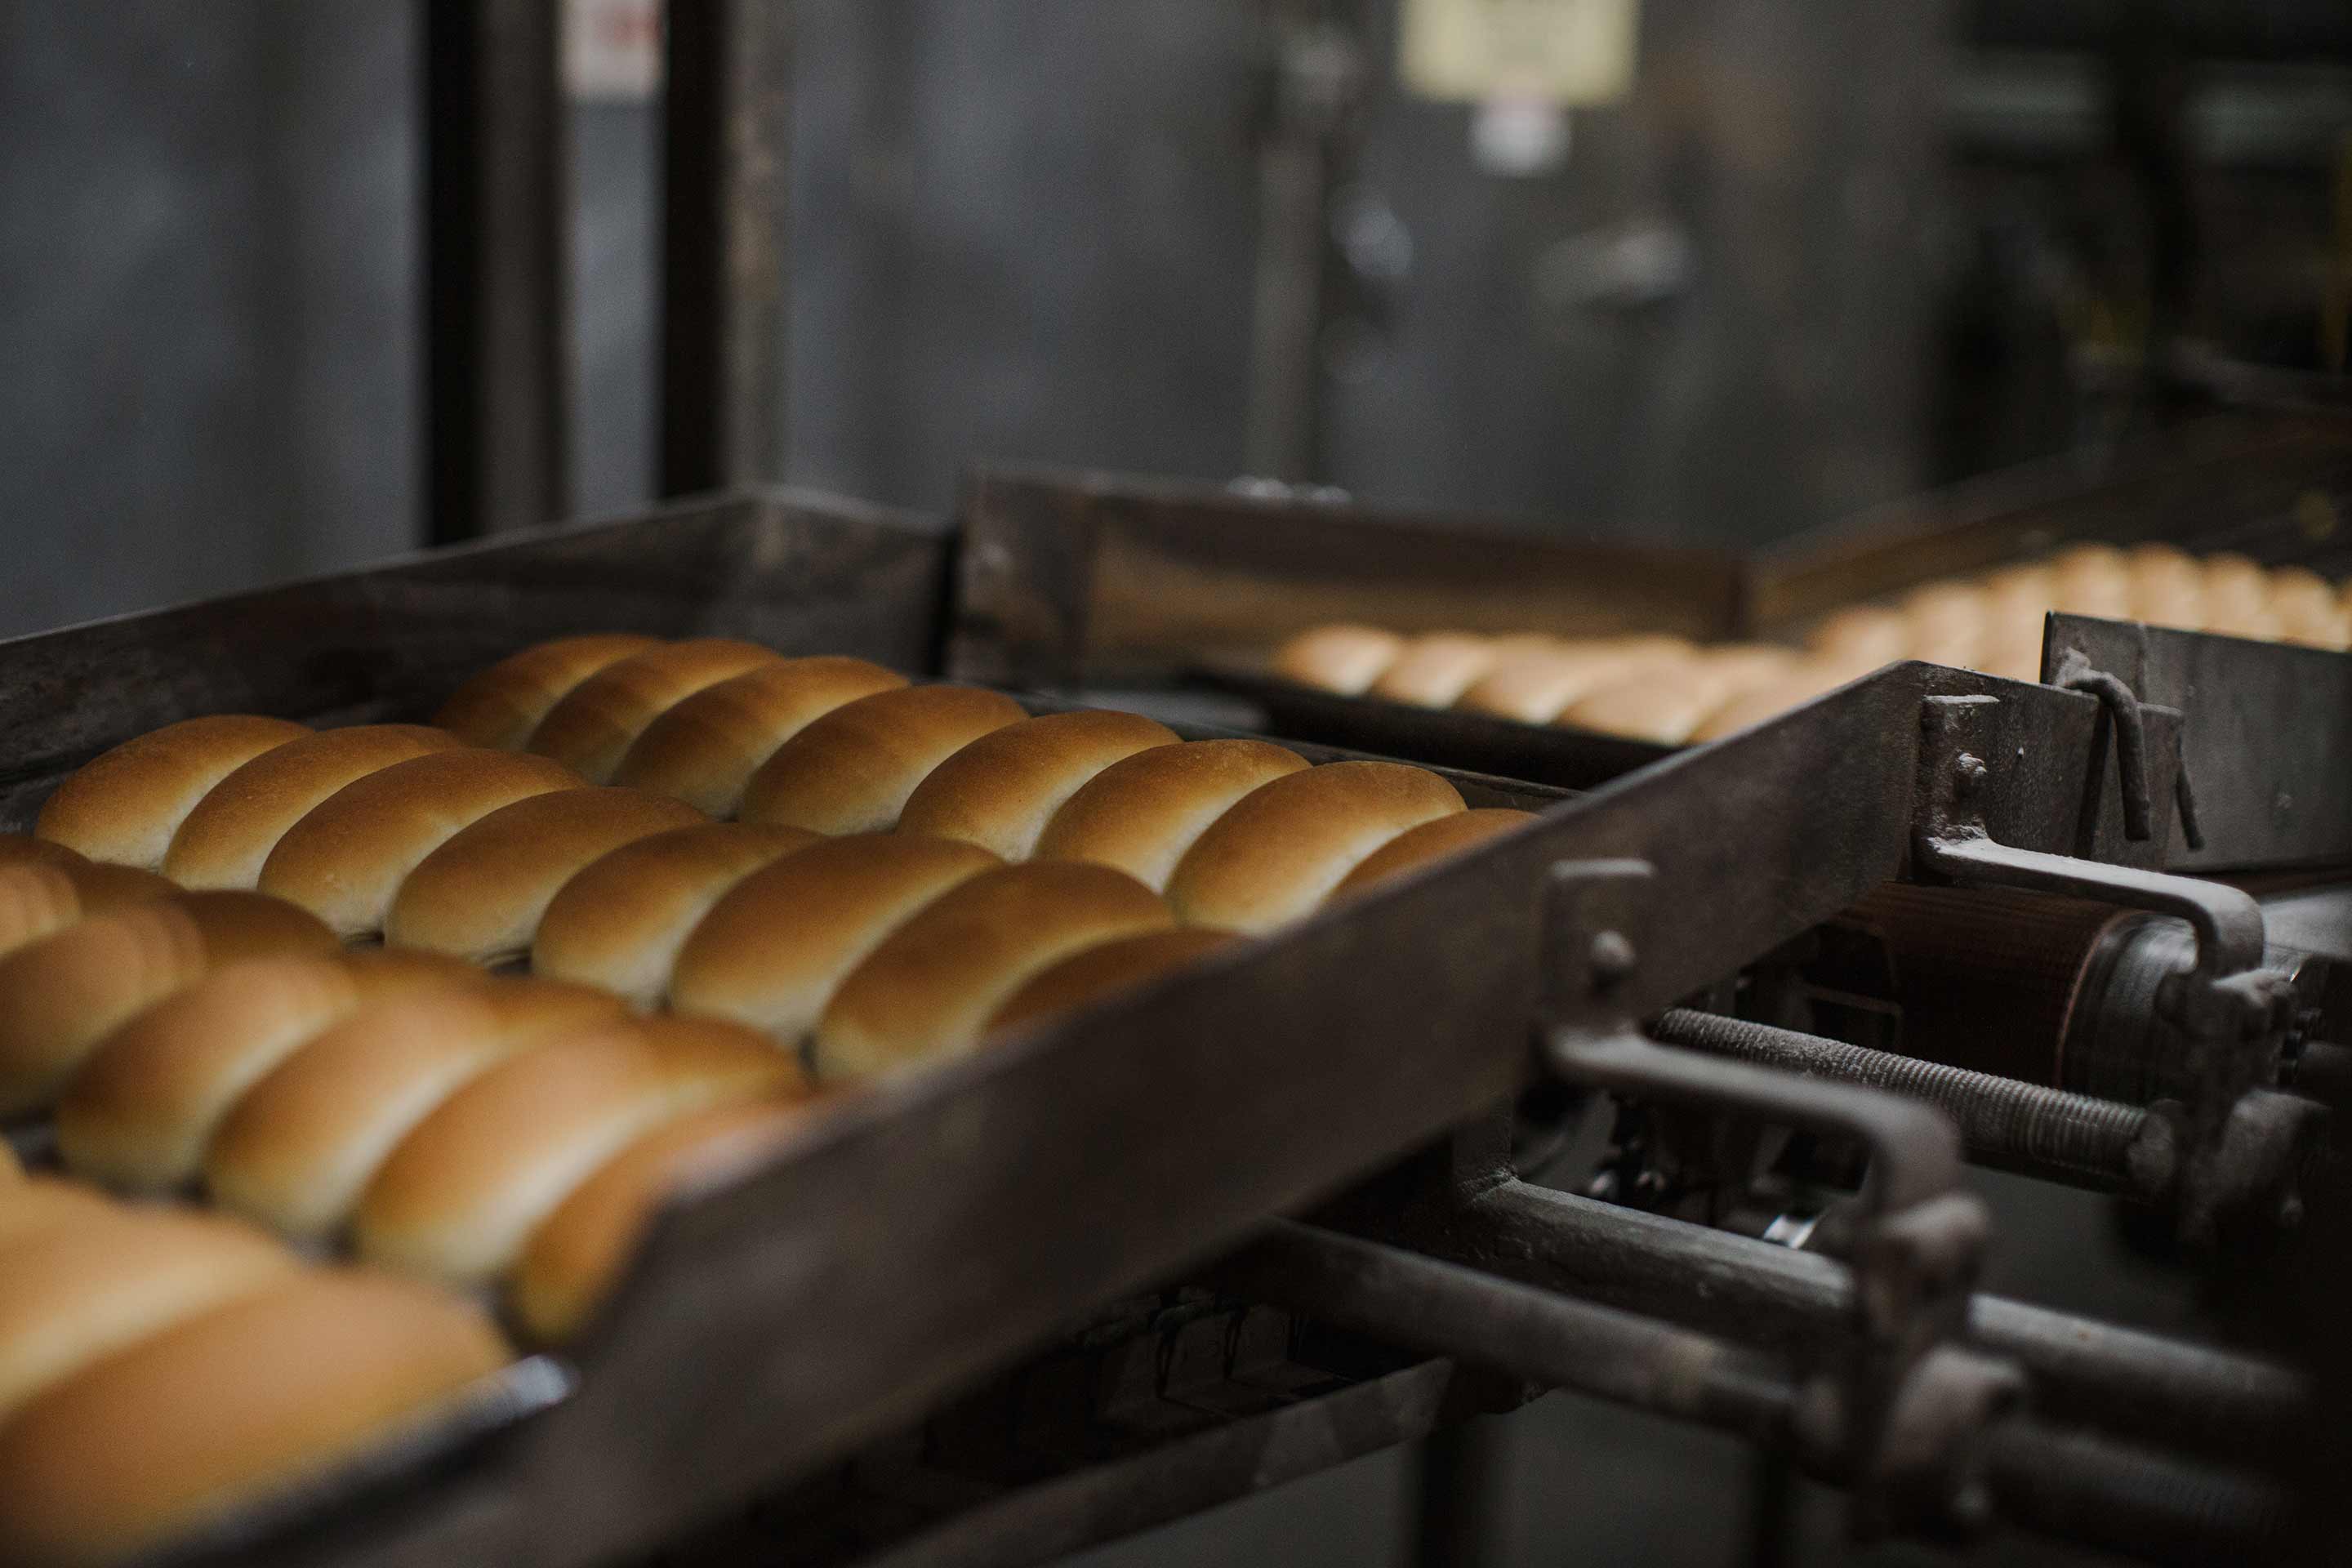 We make good bread.